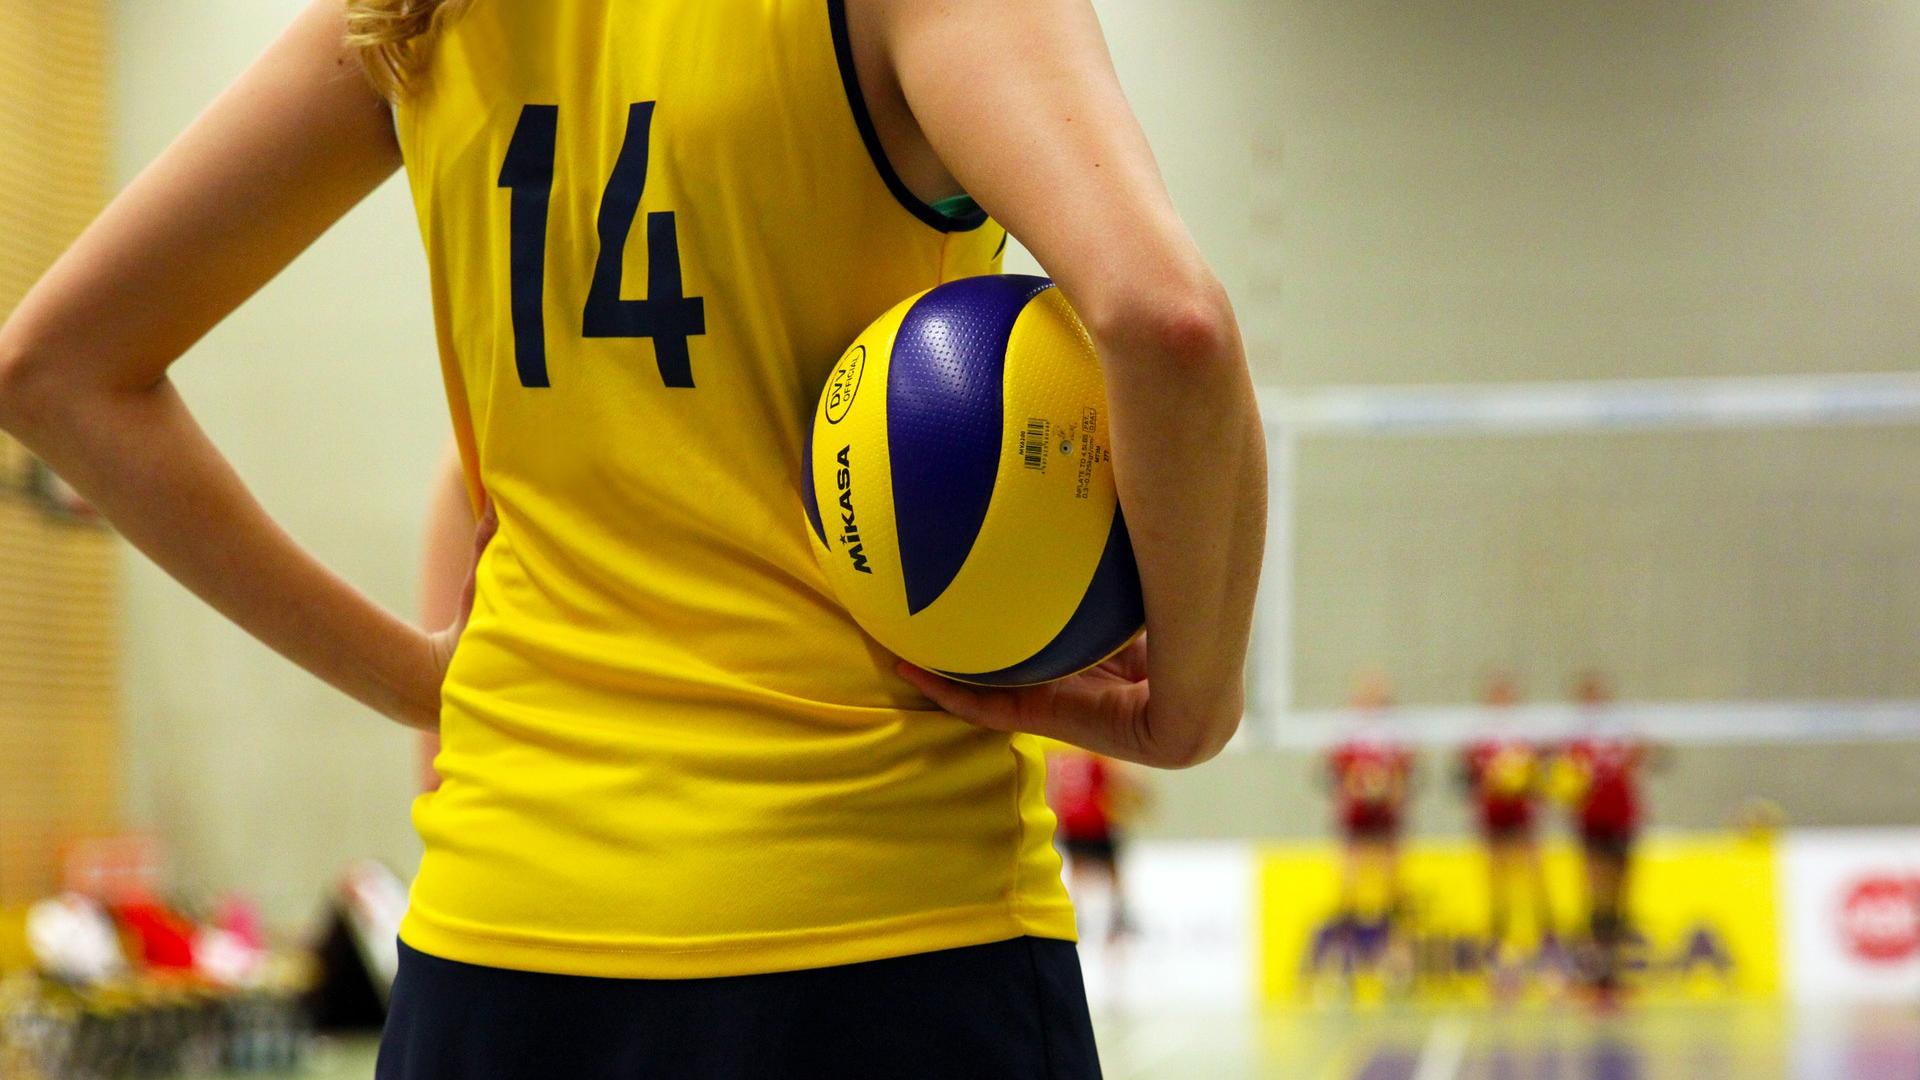 volleyball-520093_1920.jpg